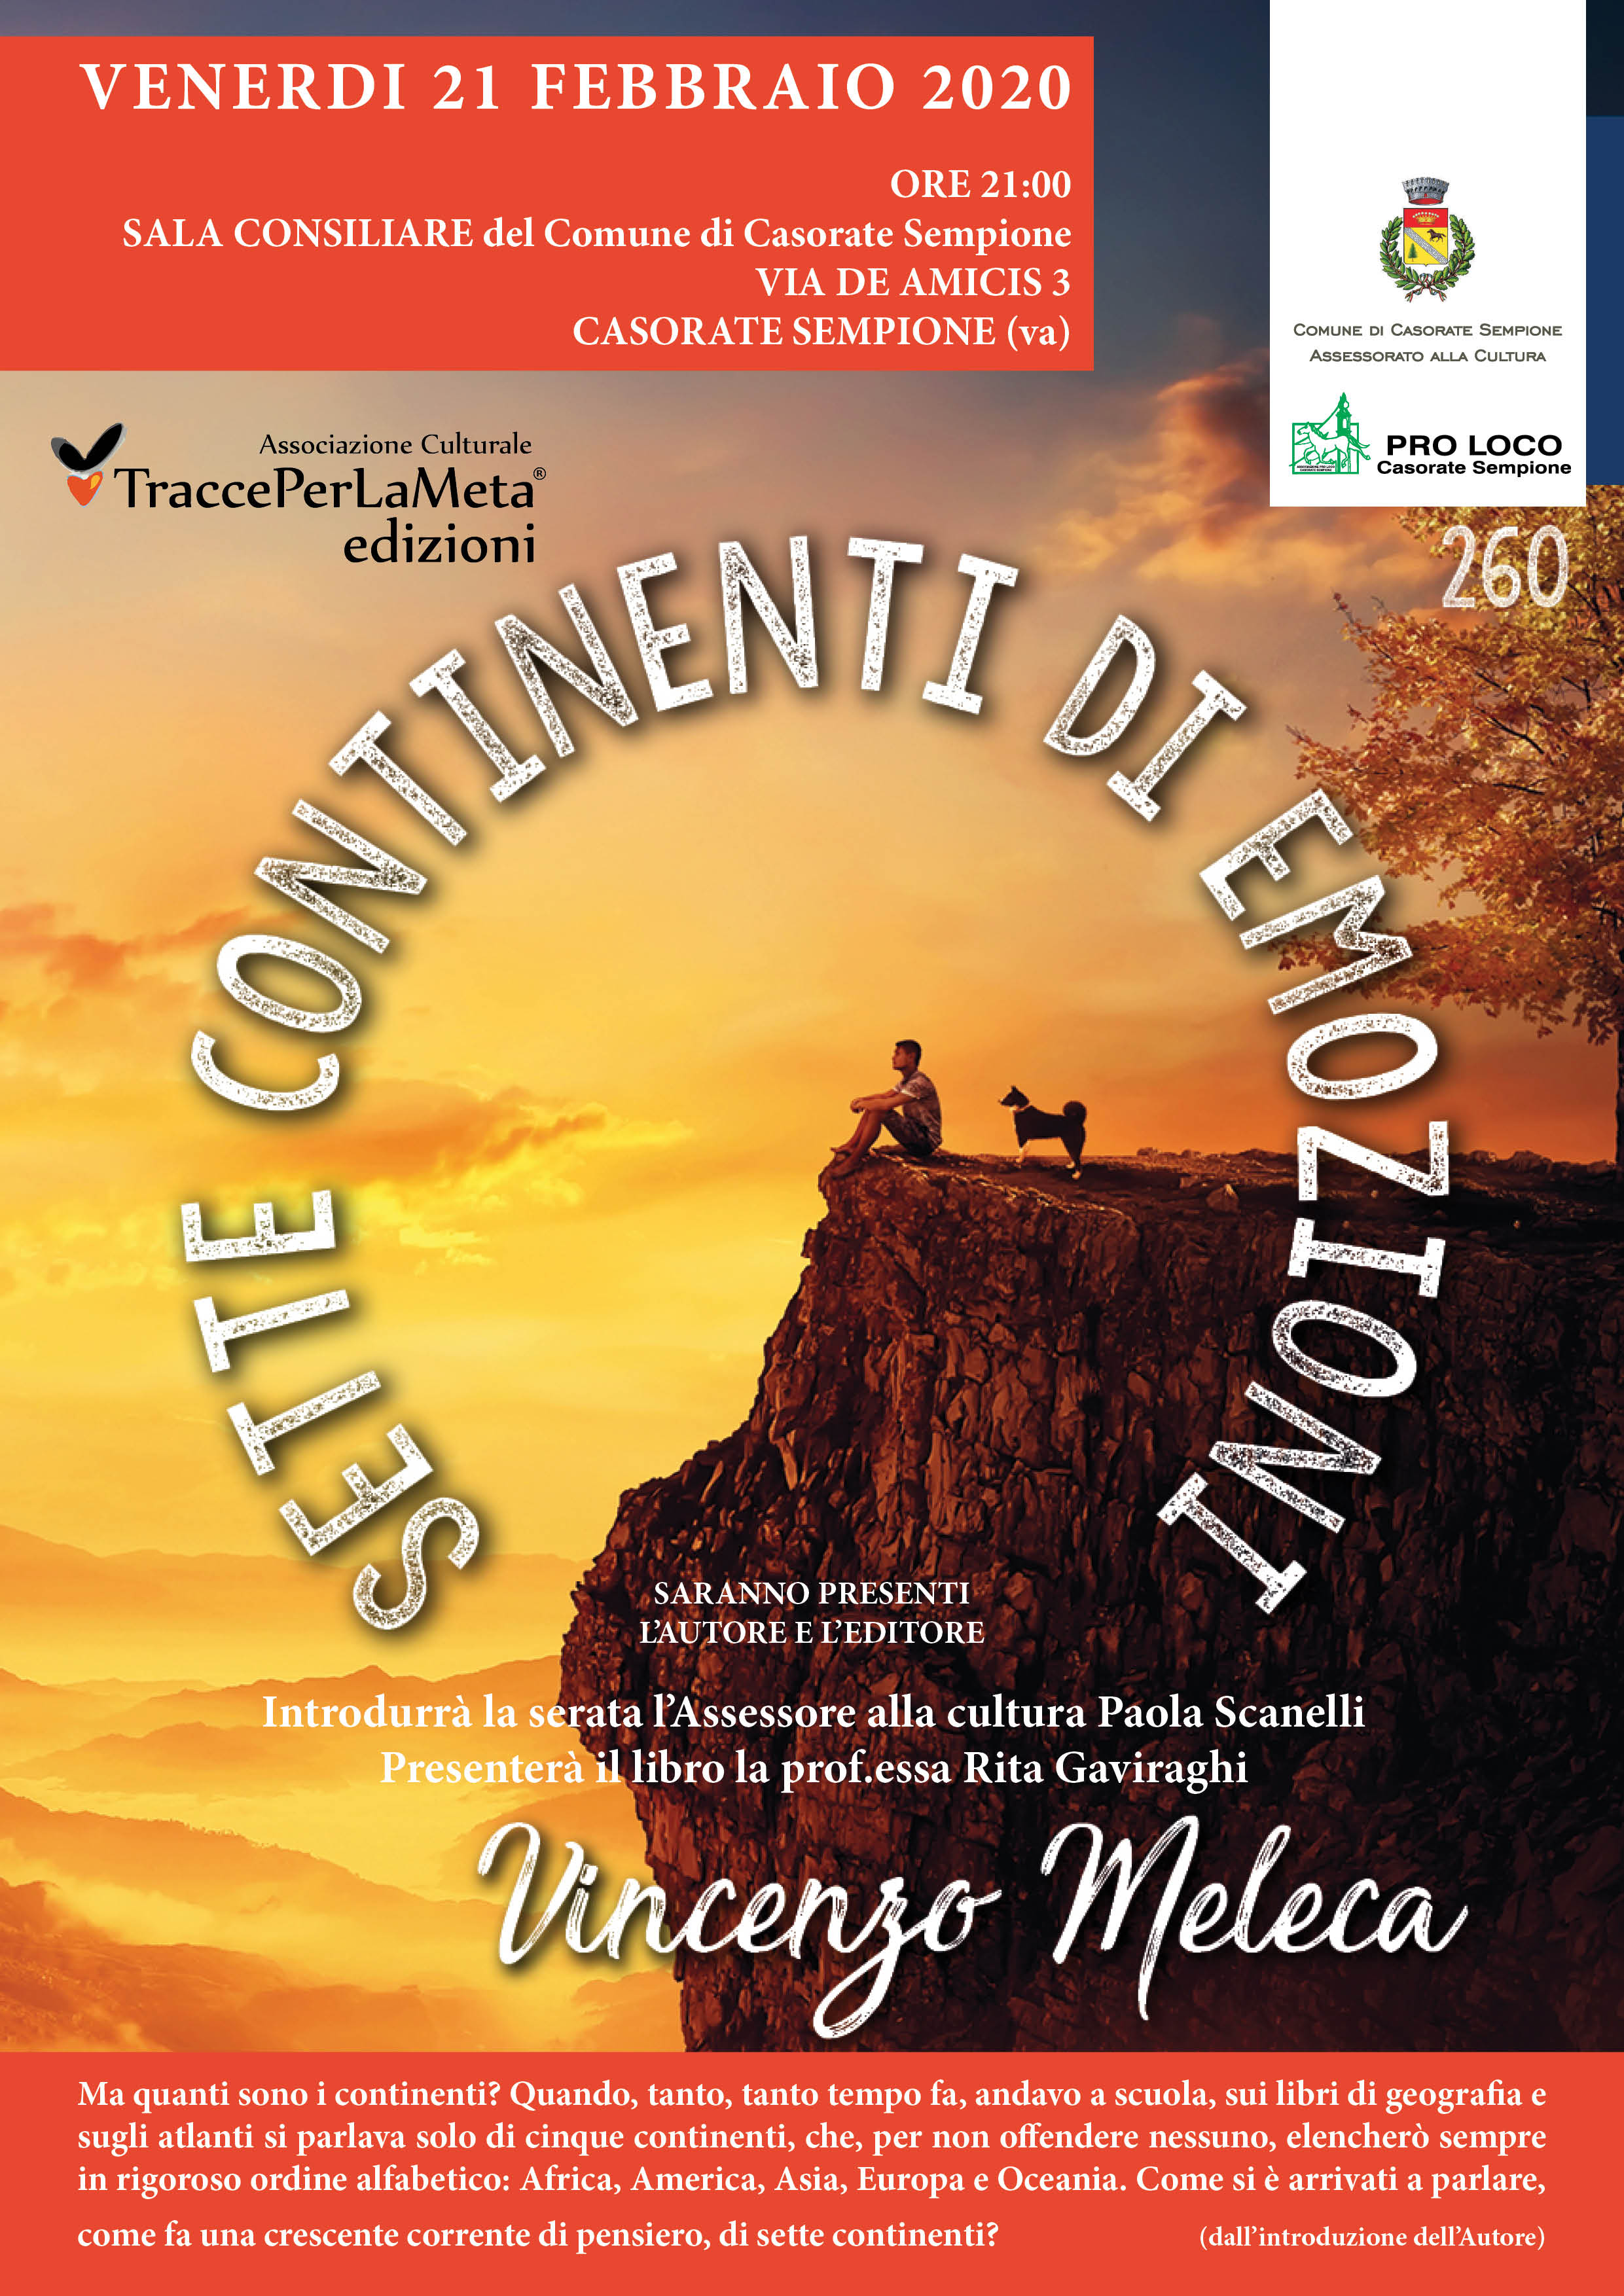 21.02.2020 – TraccePerLaMeta presenta “I SETTE CONTINENTI ” di Vincenzo Meleca